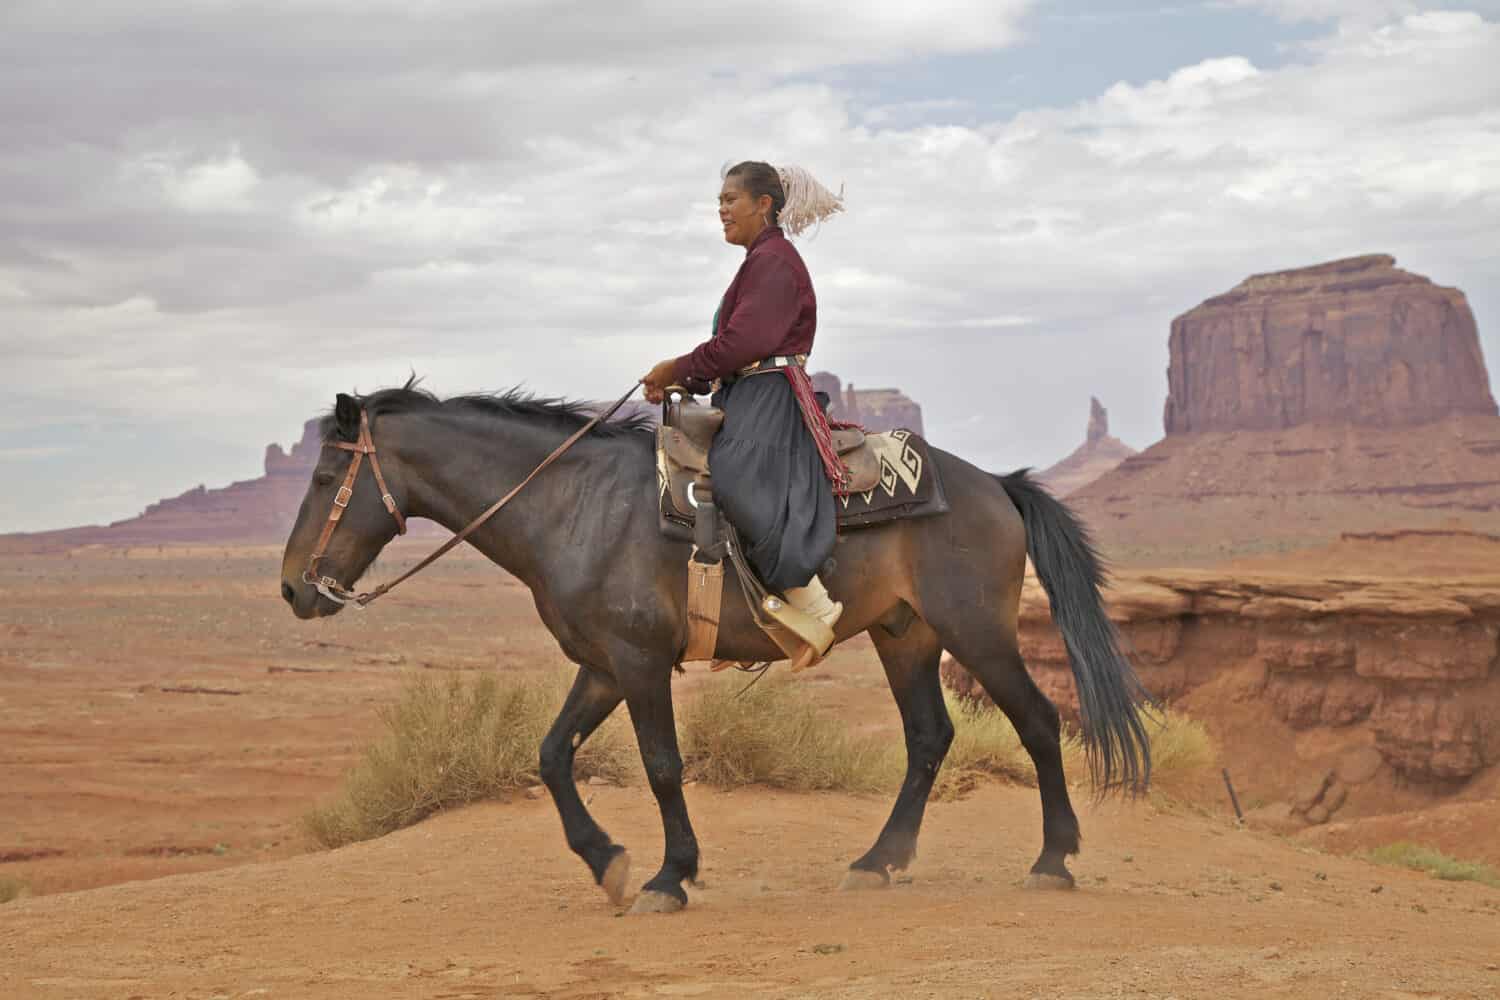 Navajo Woman on Horseback in Monument Valley Tribal Park